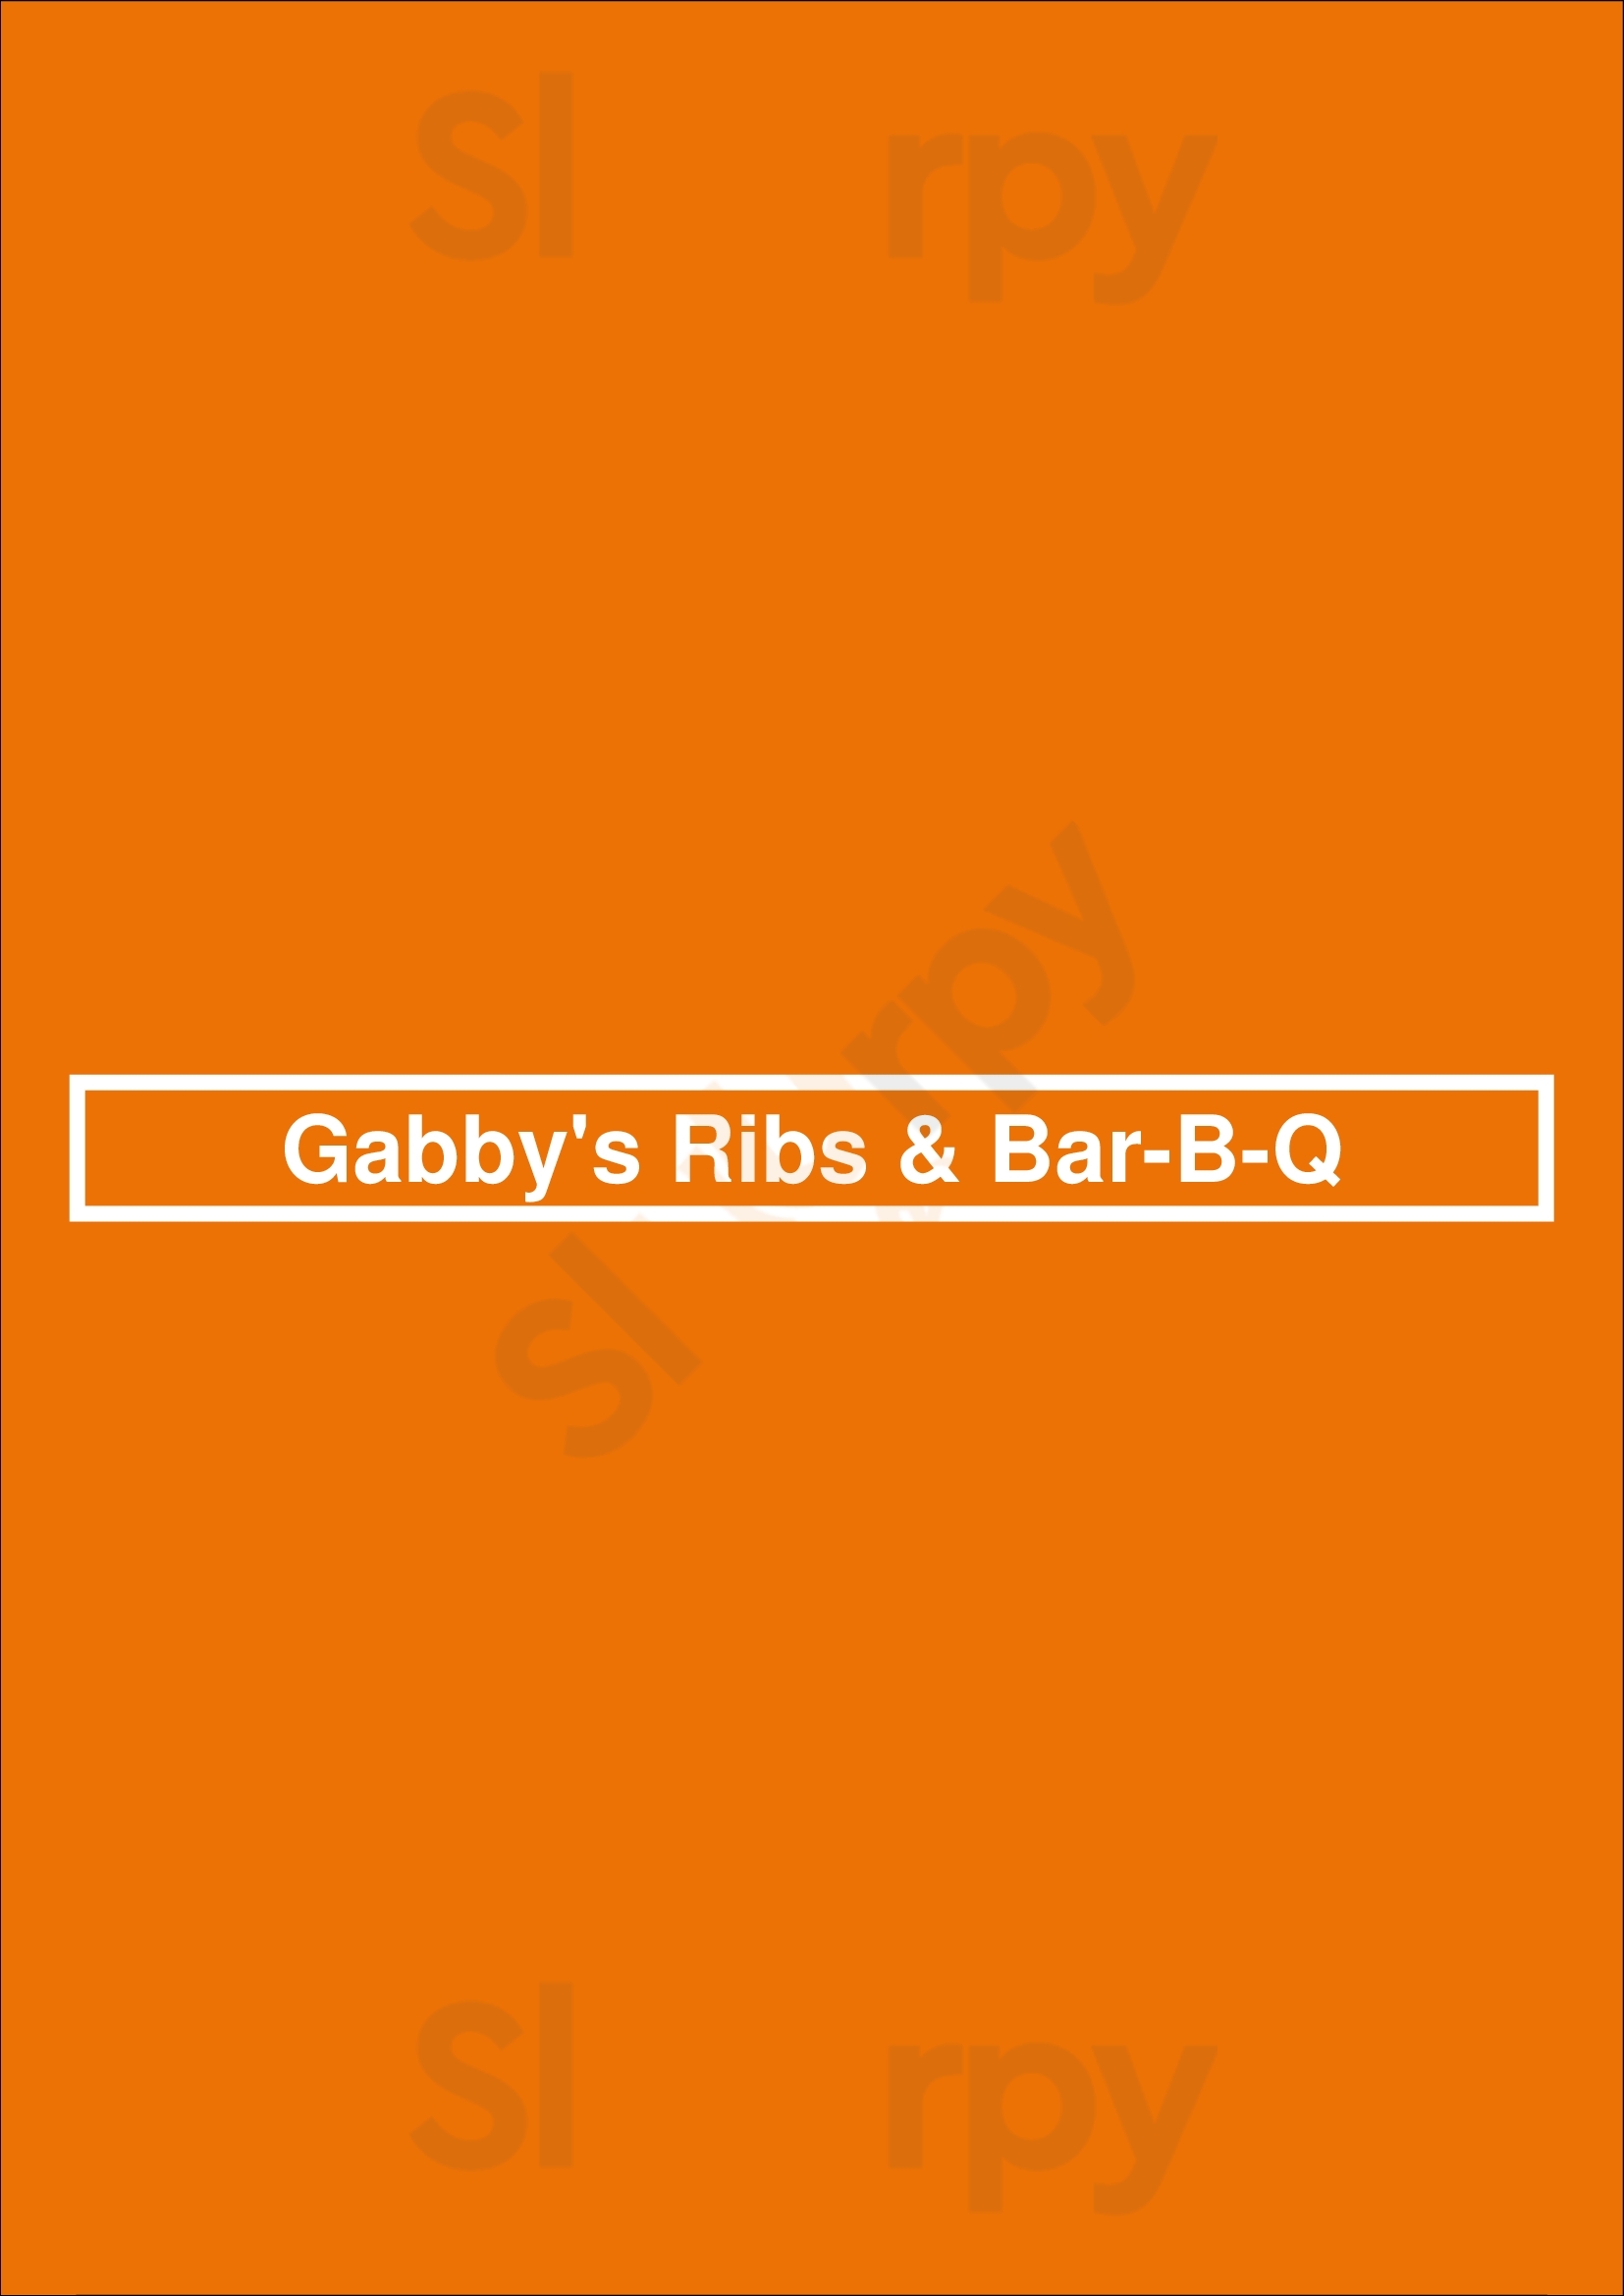 Gabby's Ribs & Bar-b-q Houston Menu - 1